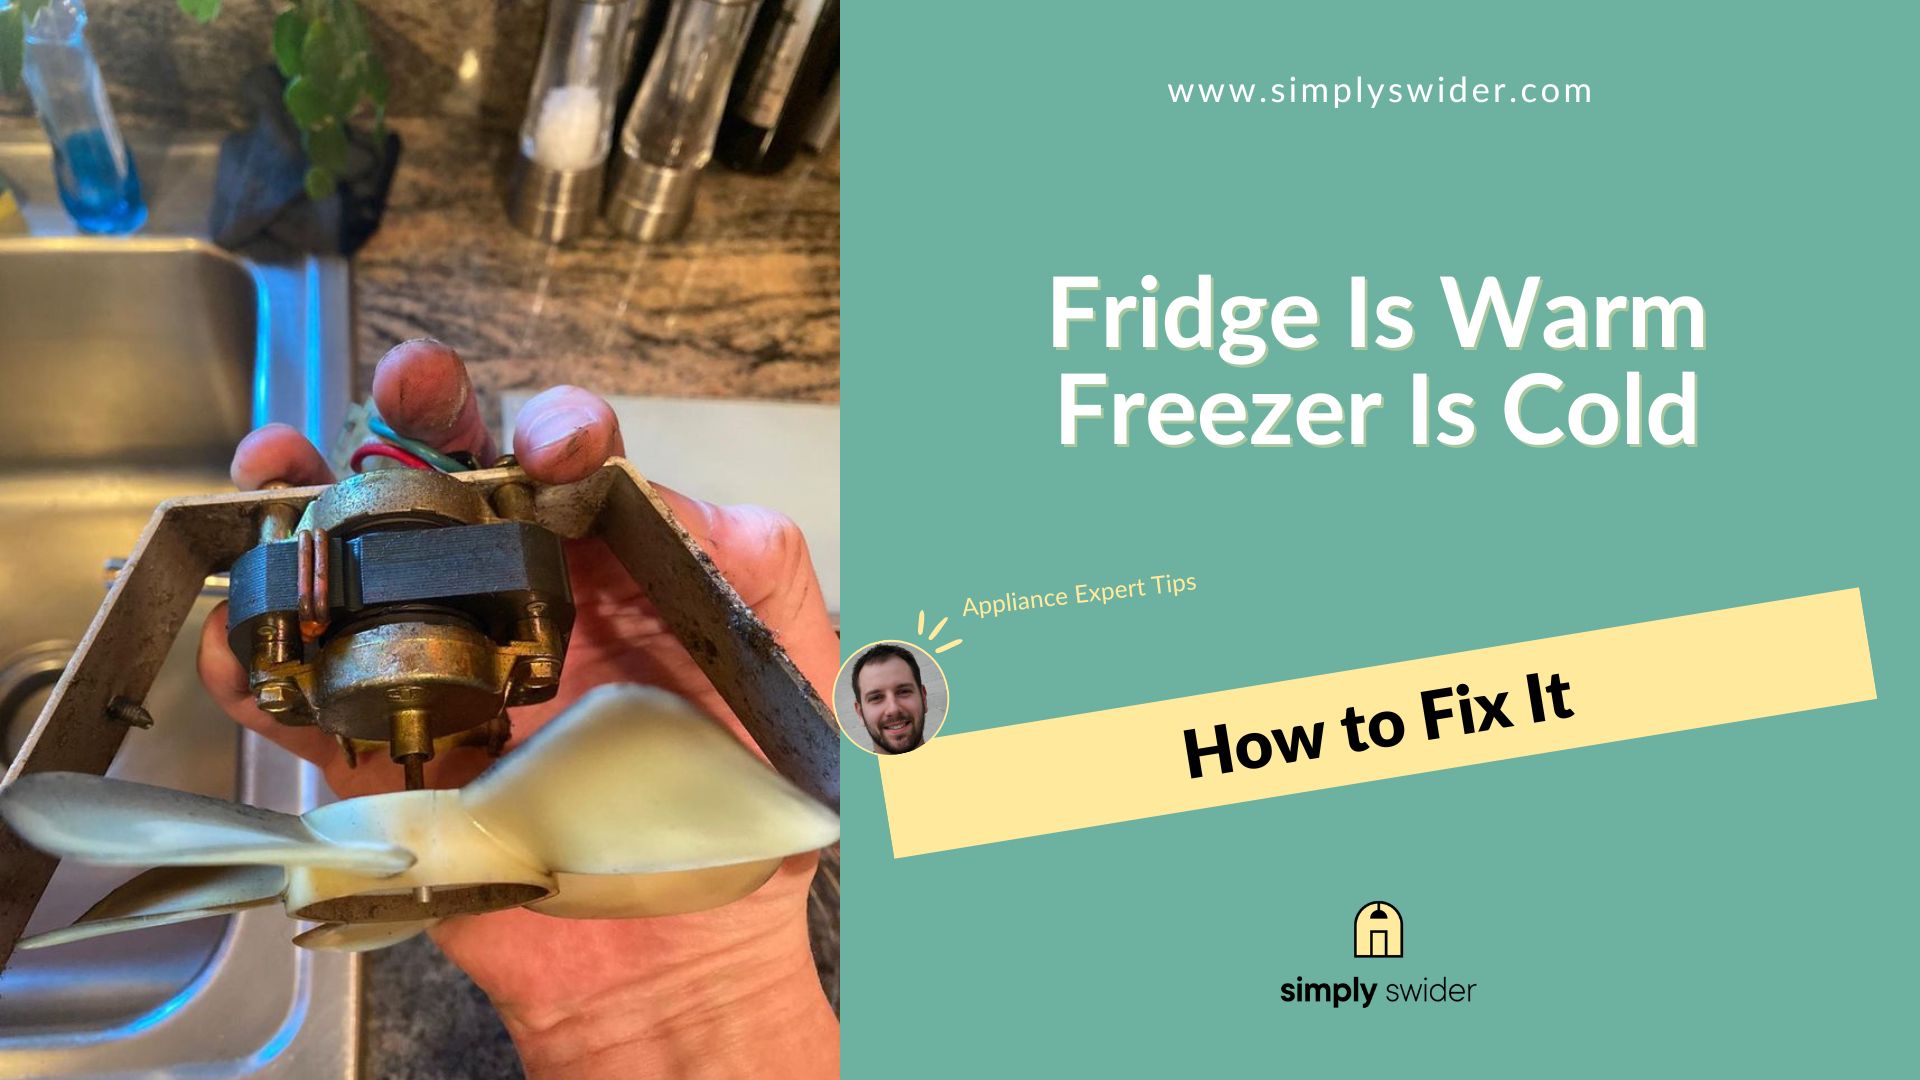 Fridge Is Warm Freezer Is Cold